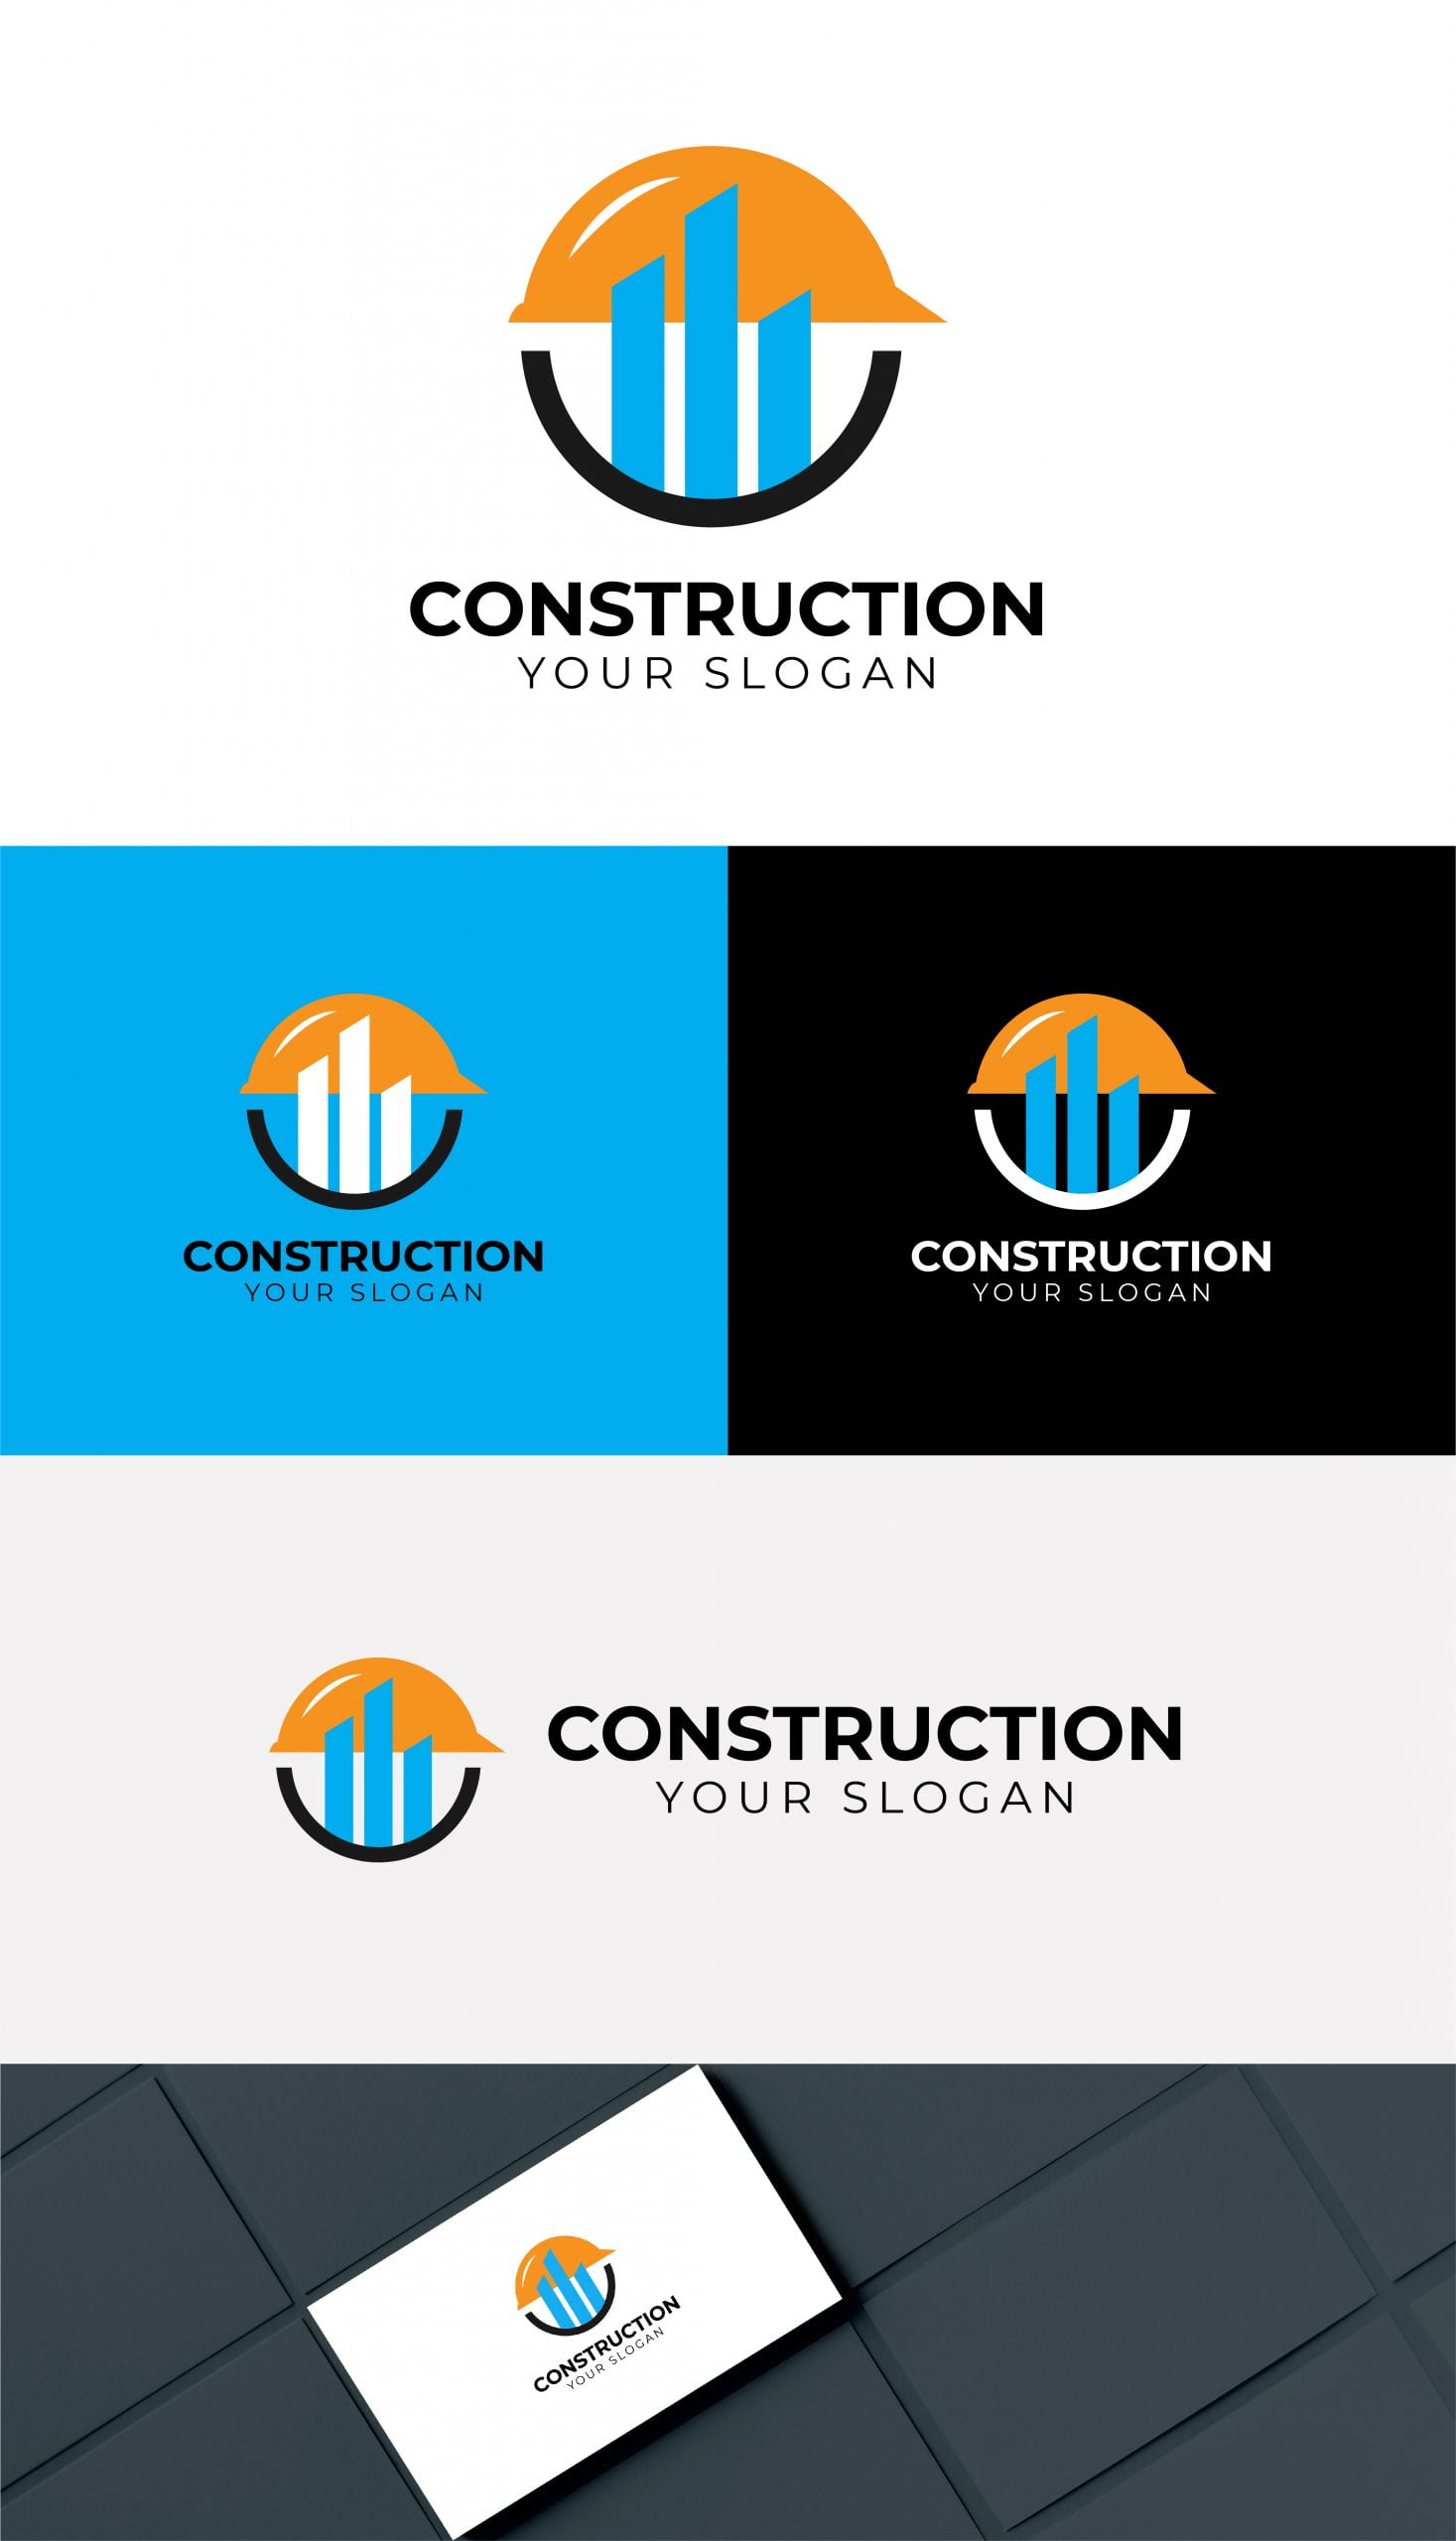 Construction Logo Images